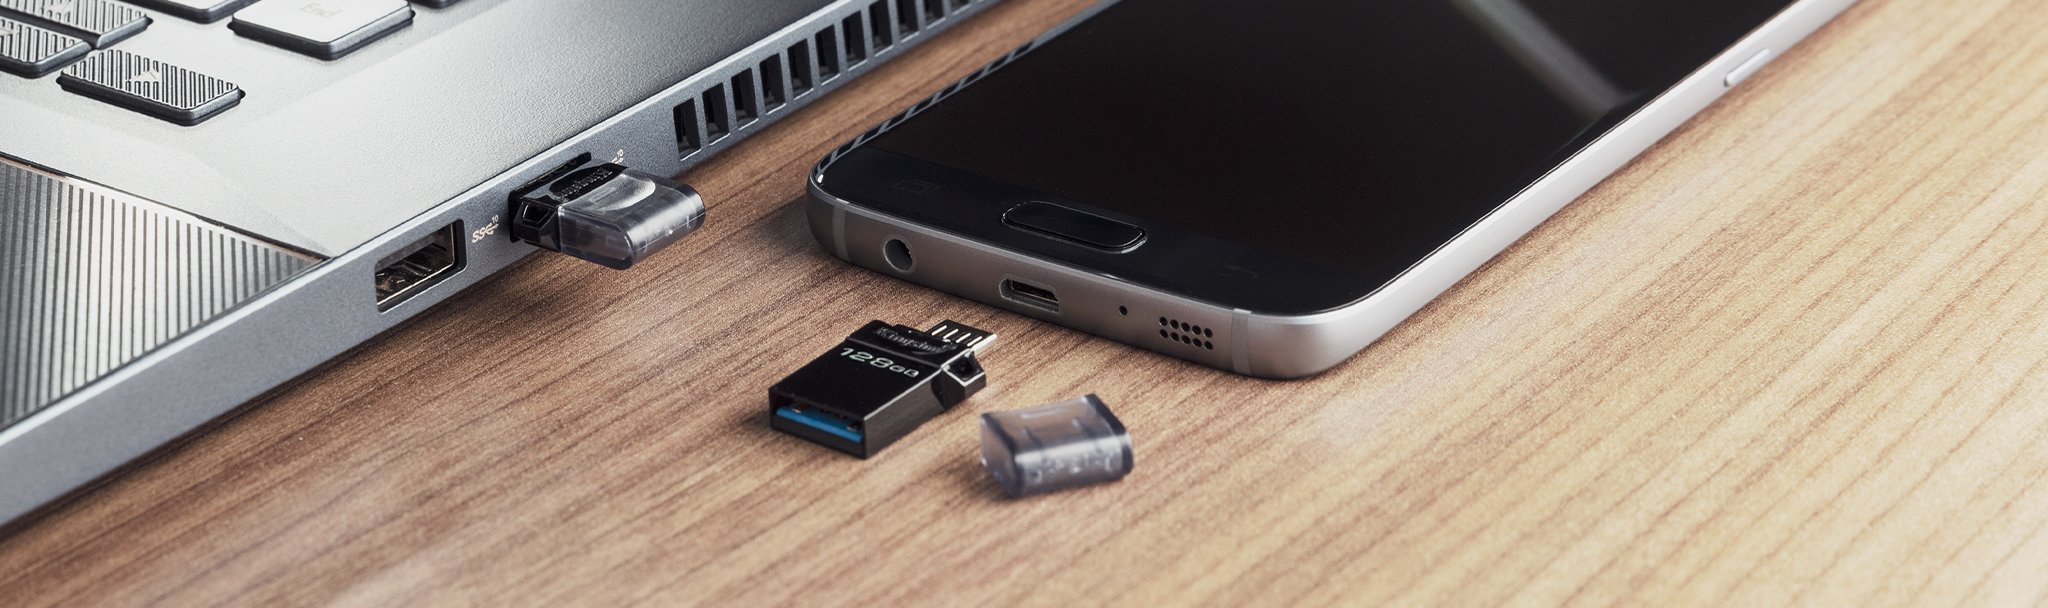 USB-накопитель DataTraveler microDuo 3.0 G2 — Kingston Technology